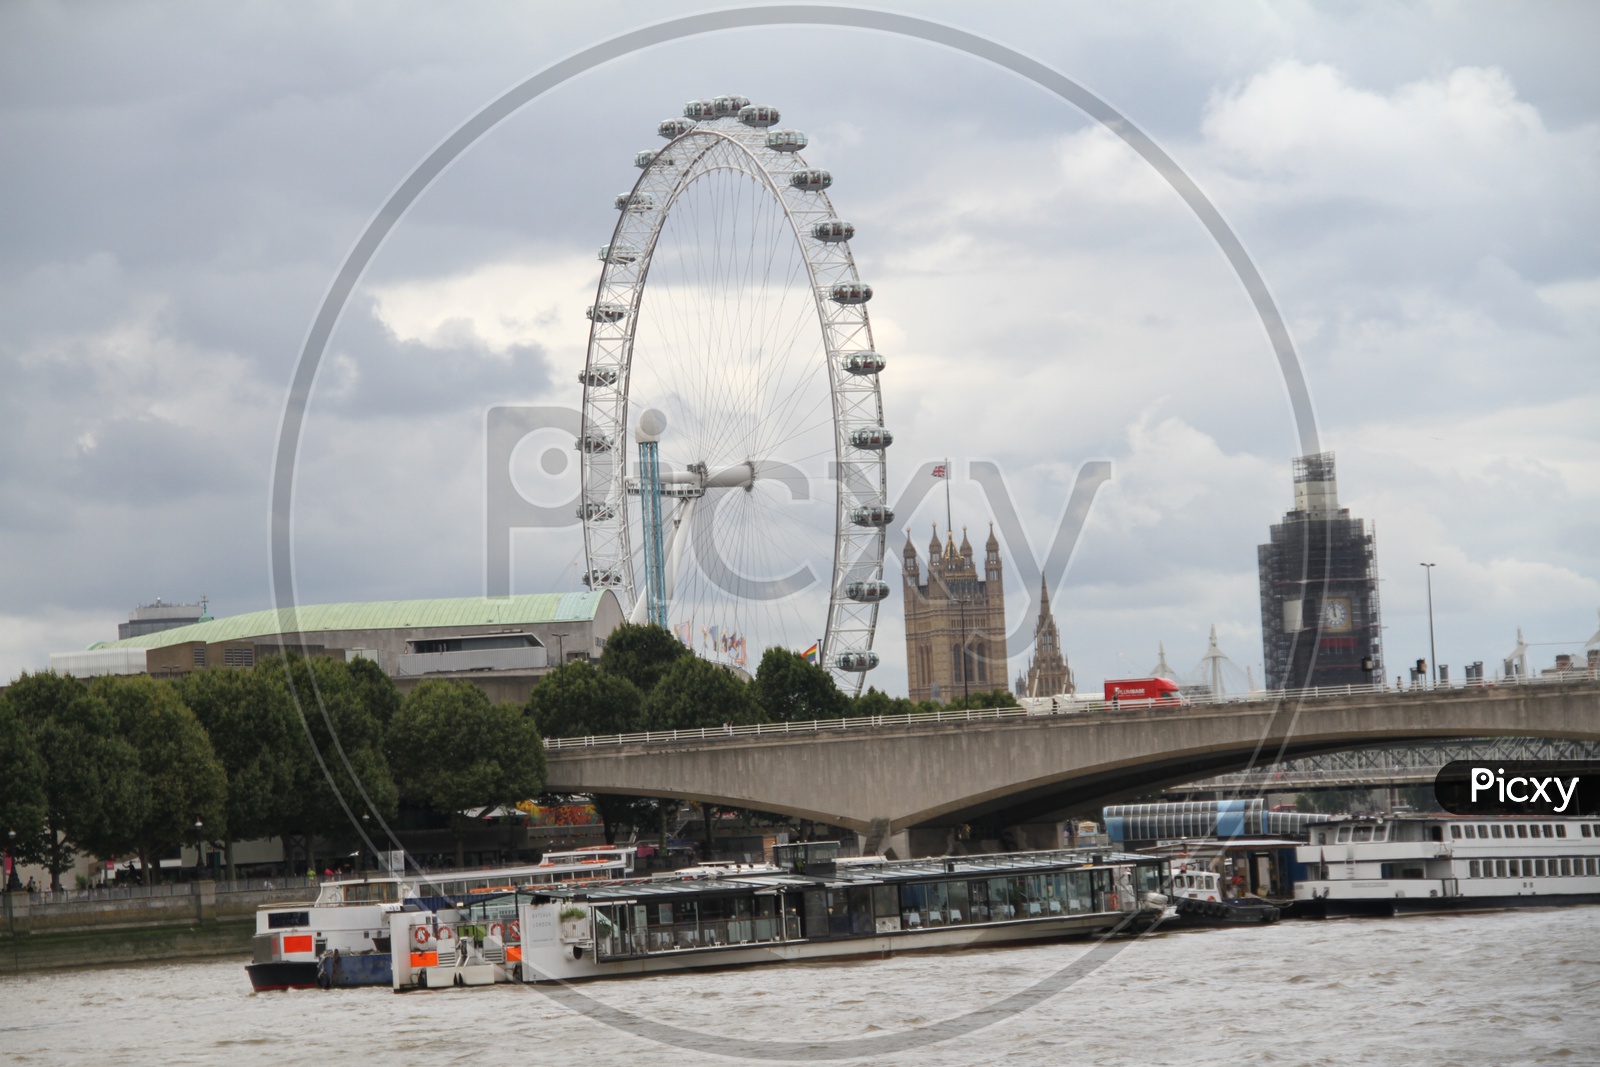 London Eye Ferris Wheel shot from a Boat on Thames River